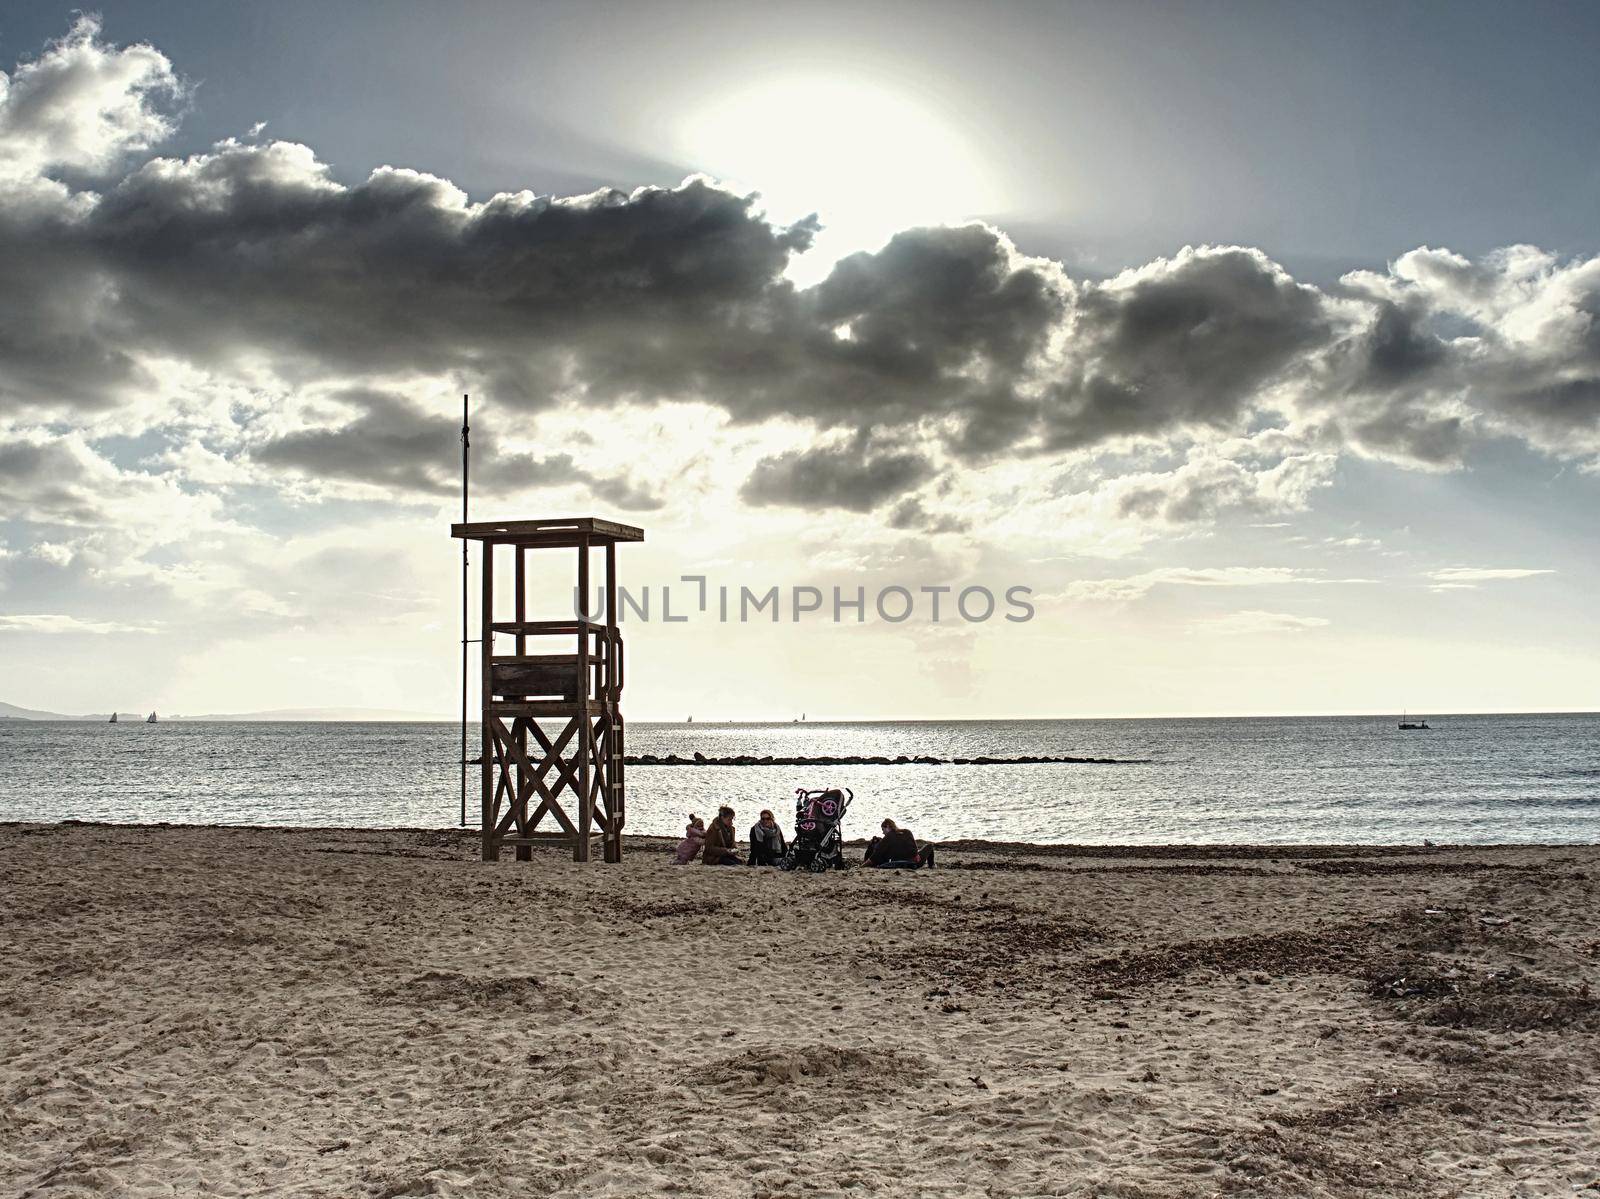 Family take a rest on sandy beach bellow lifeguard tower. Calm evening sea in bay. Palma de Mallorca, 26th of January 2020